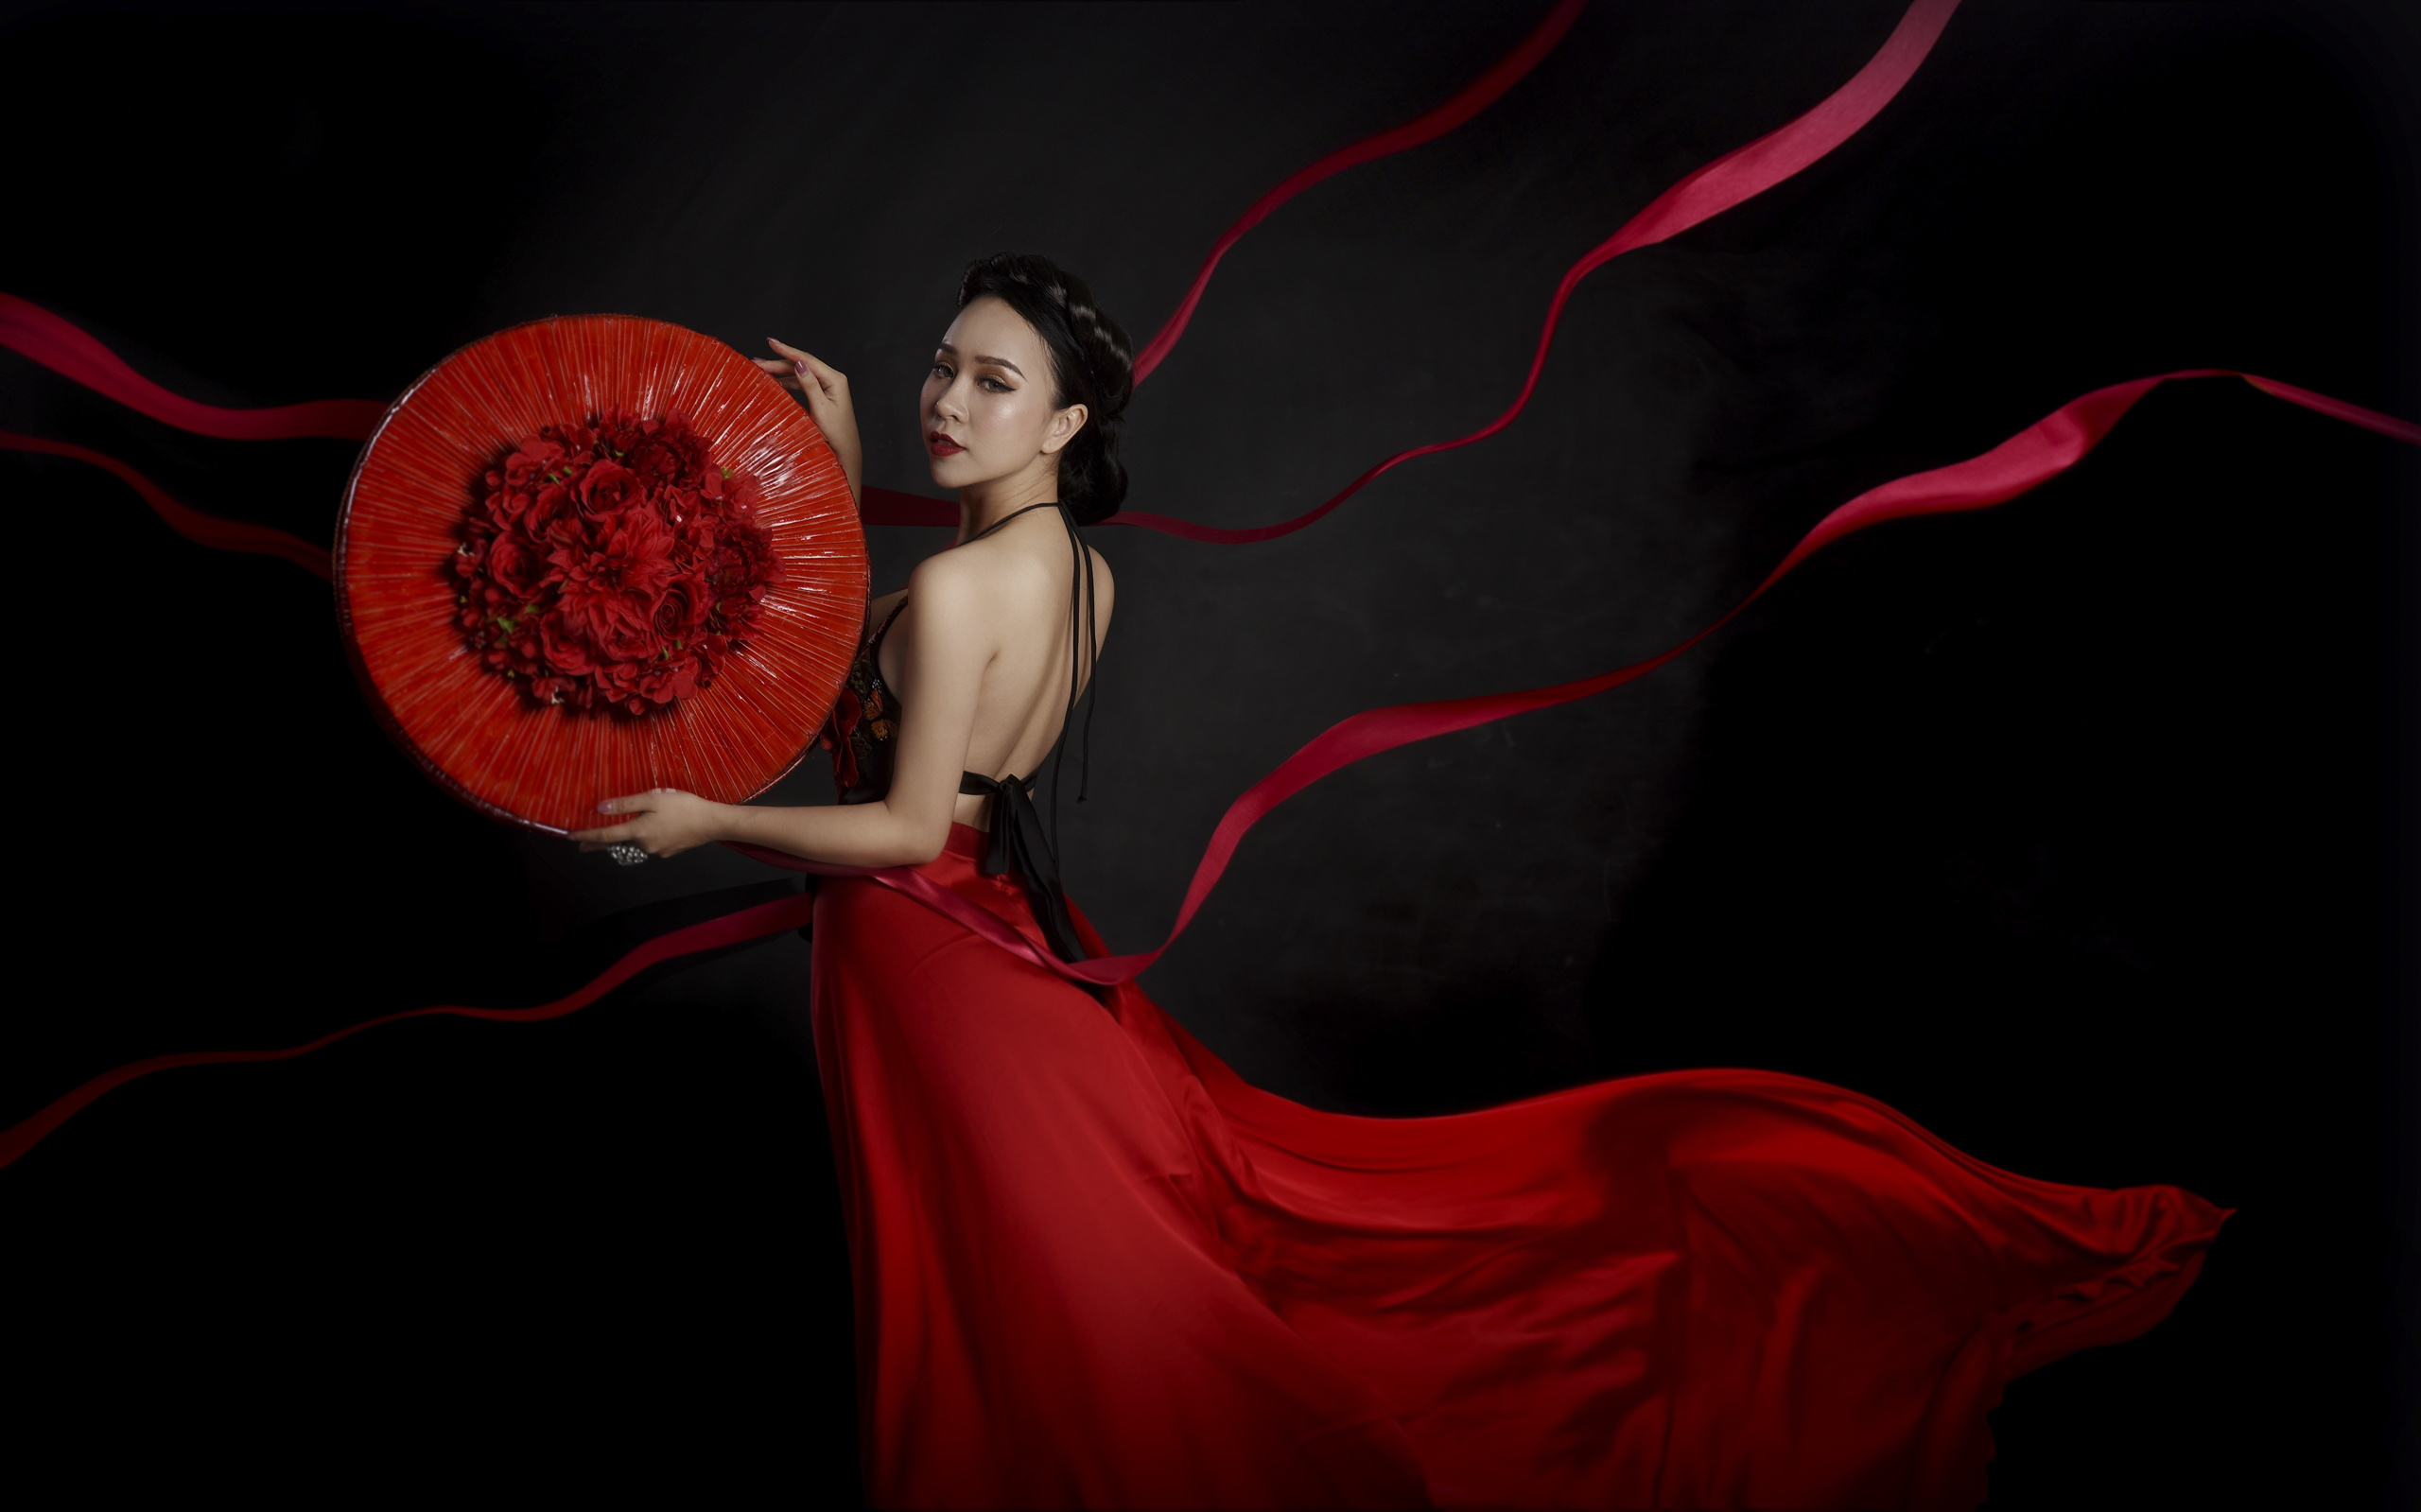 Asian Model Women Long Hair Dark Hair Dark Background Red Dress Hair Knot Looking At Viewer 2560x1599